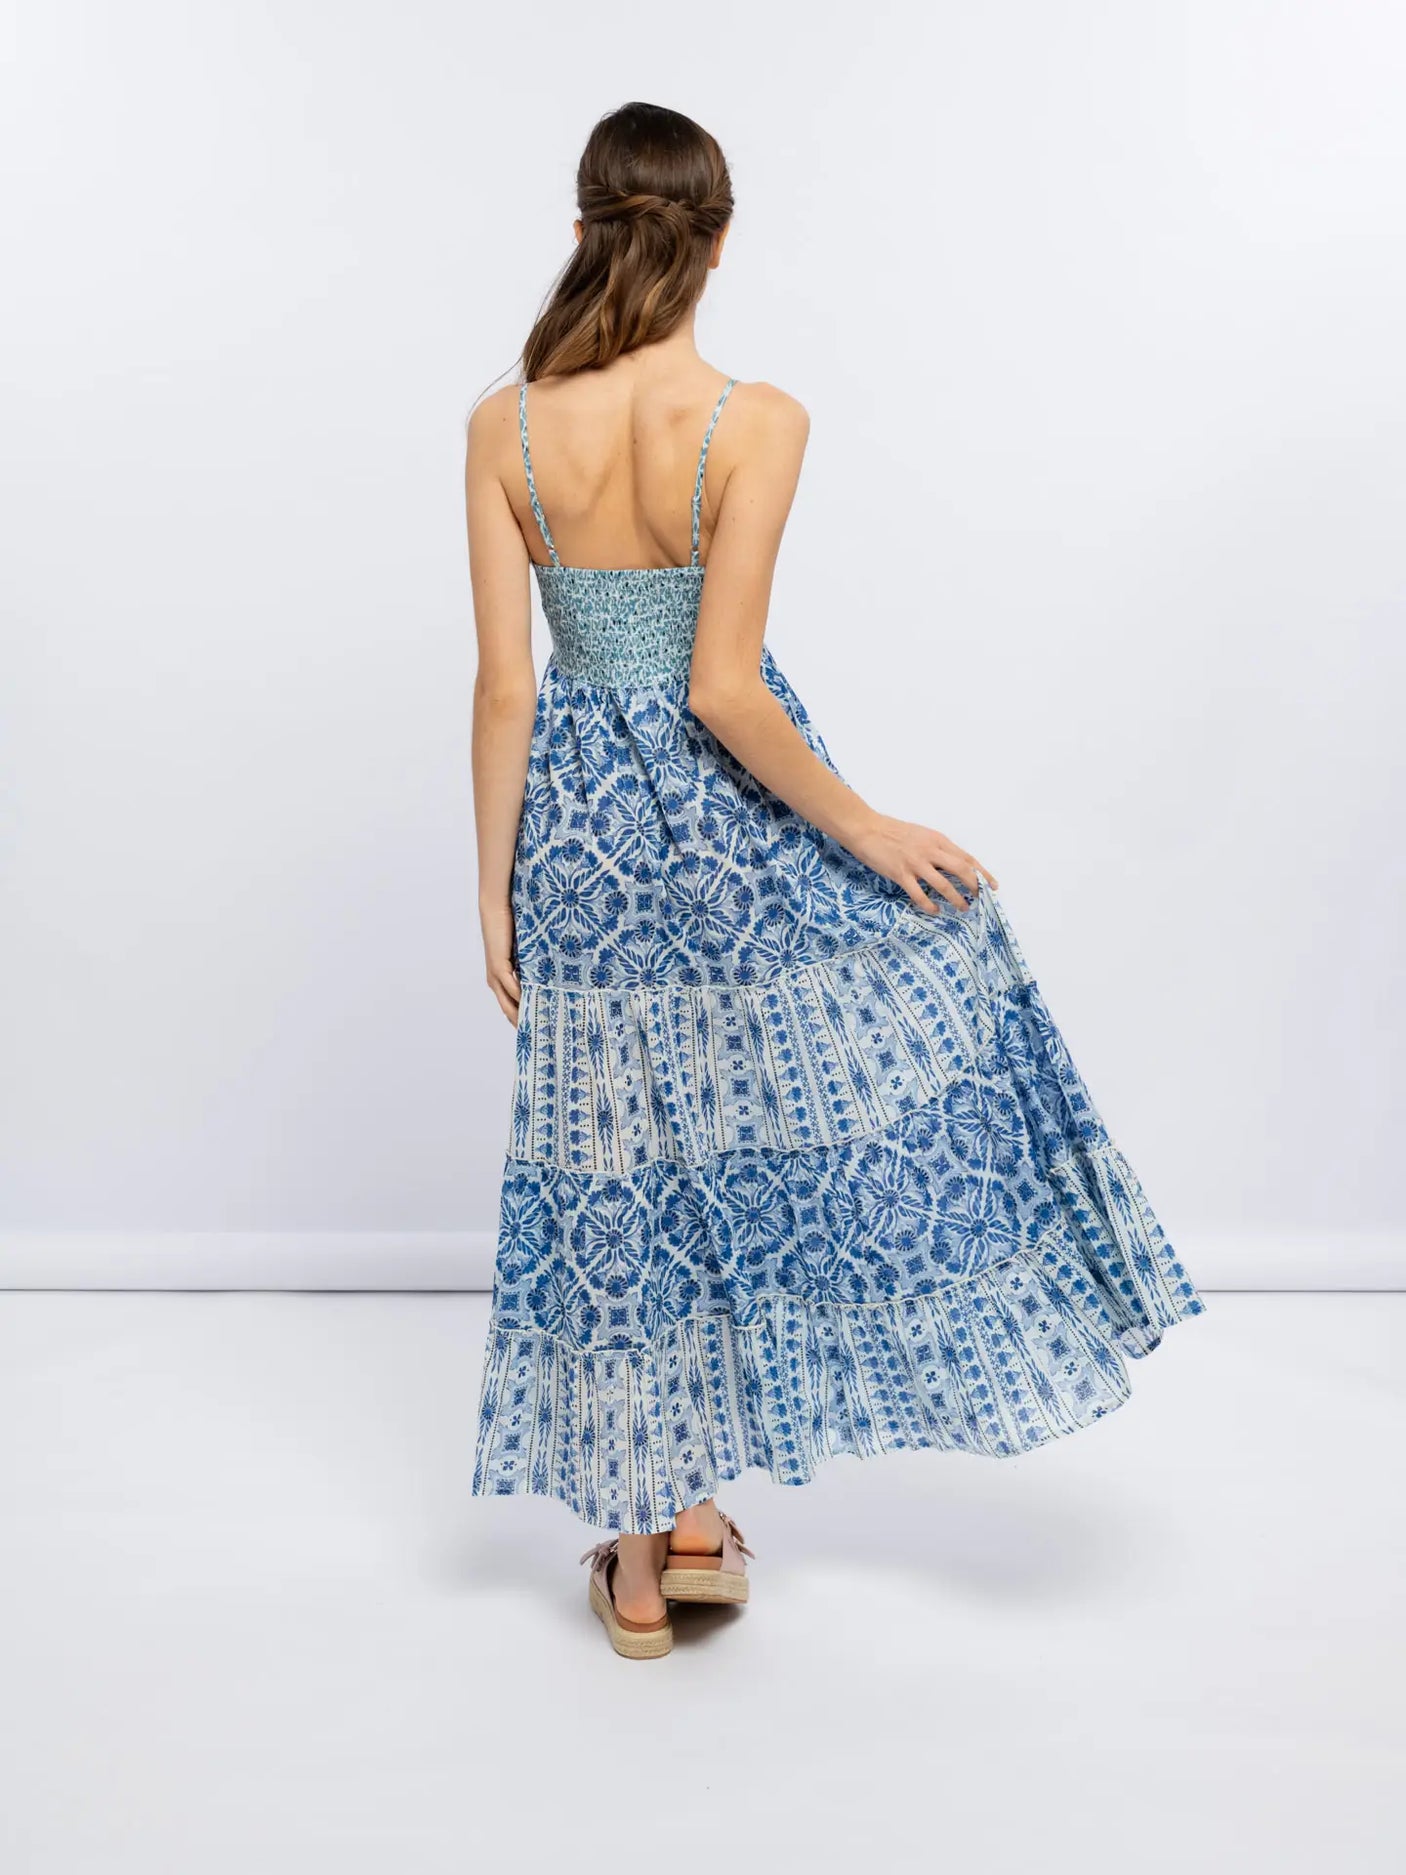 Elegant Fusion Cotton Dress